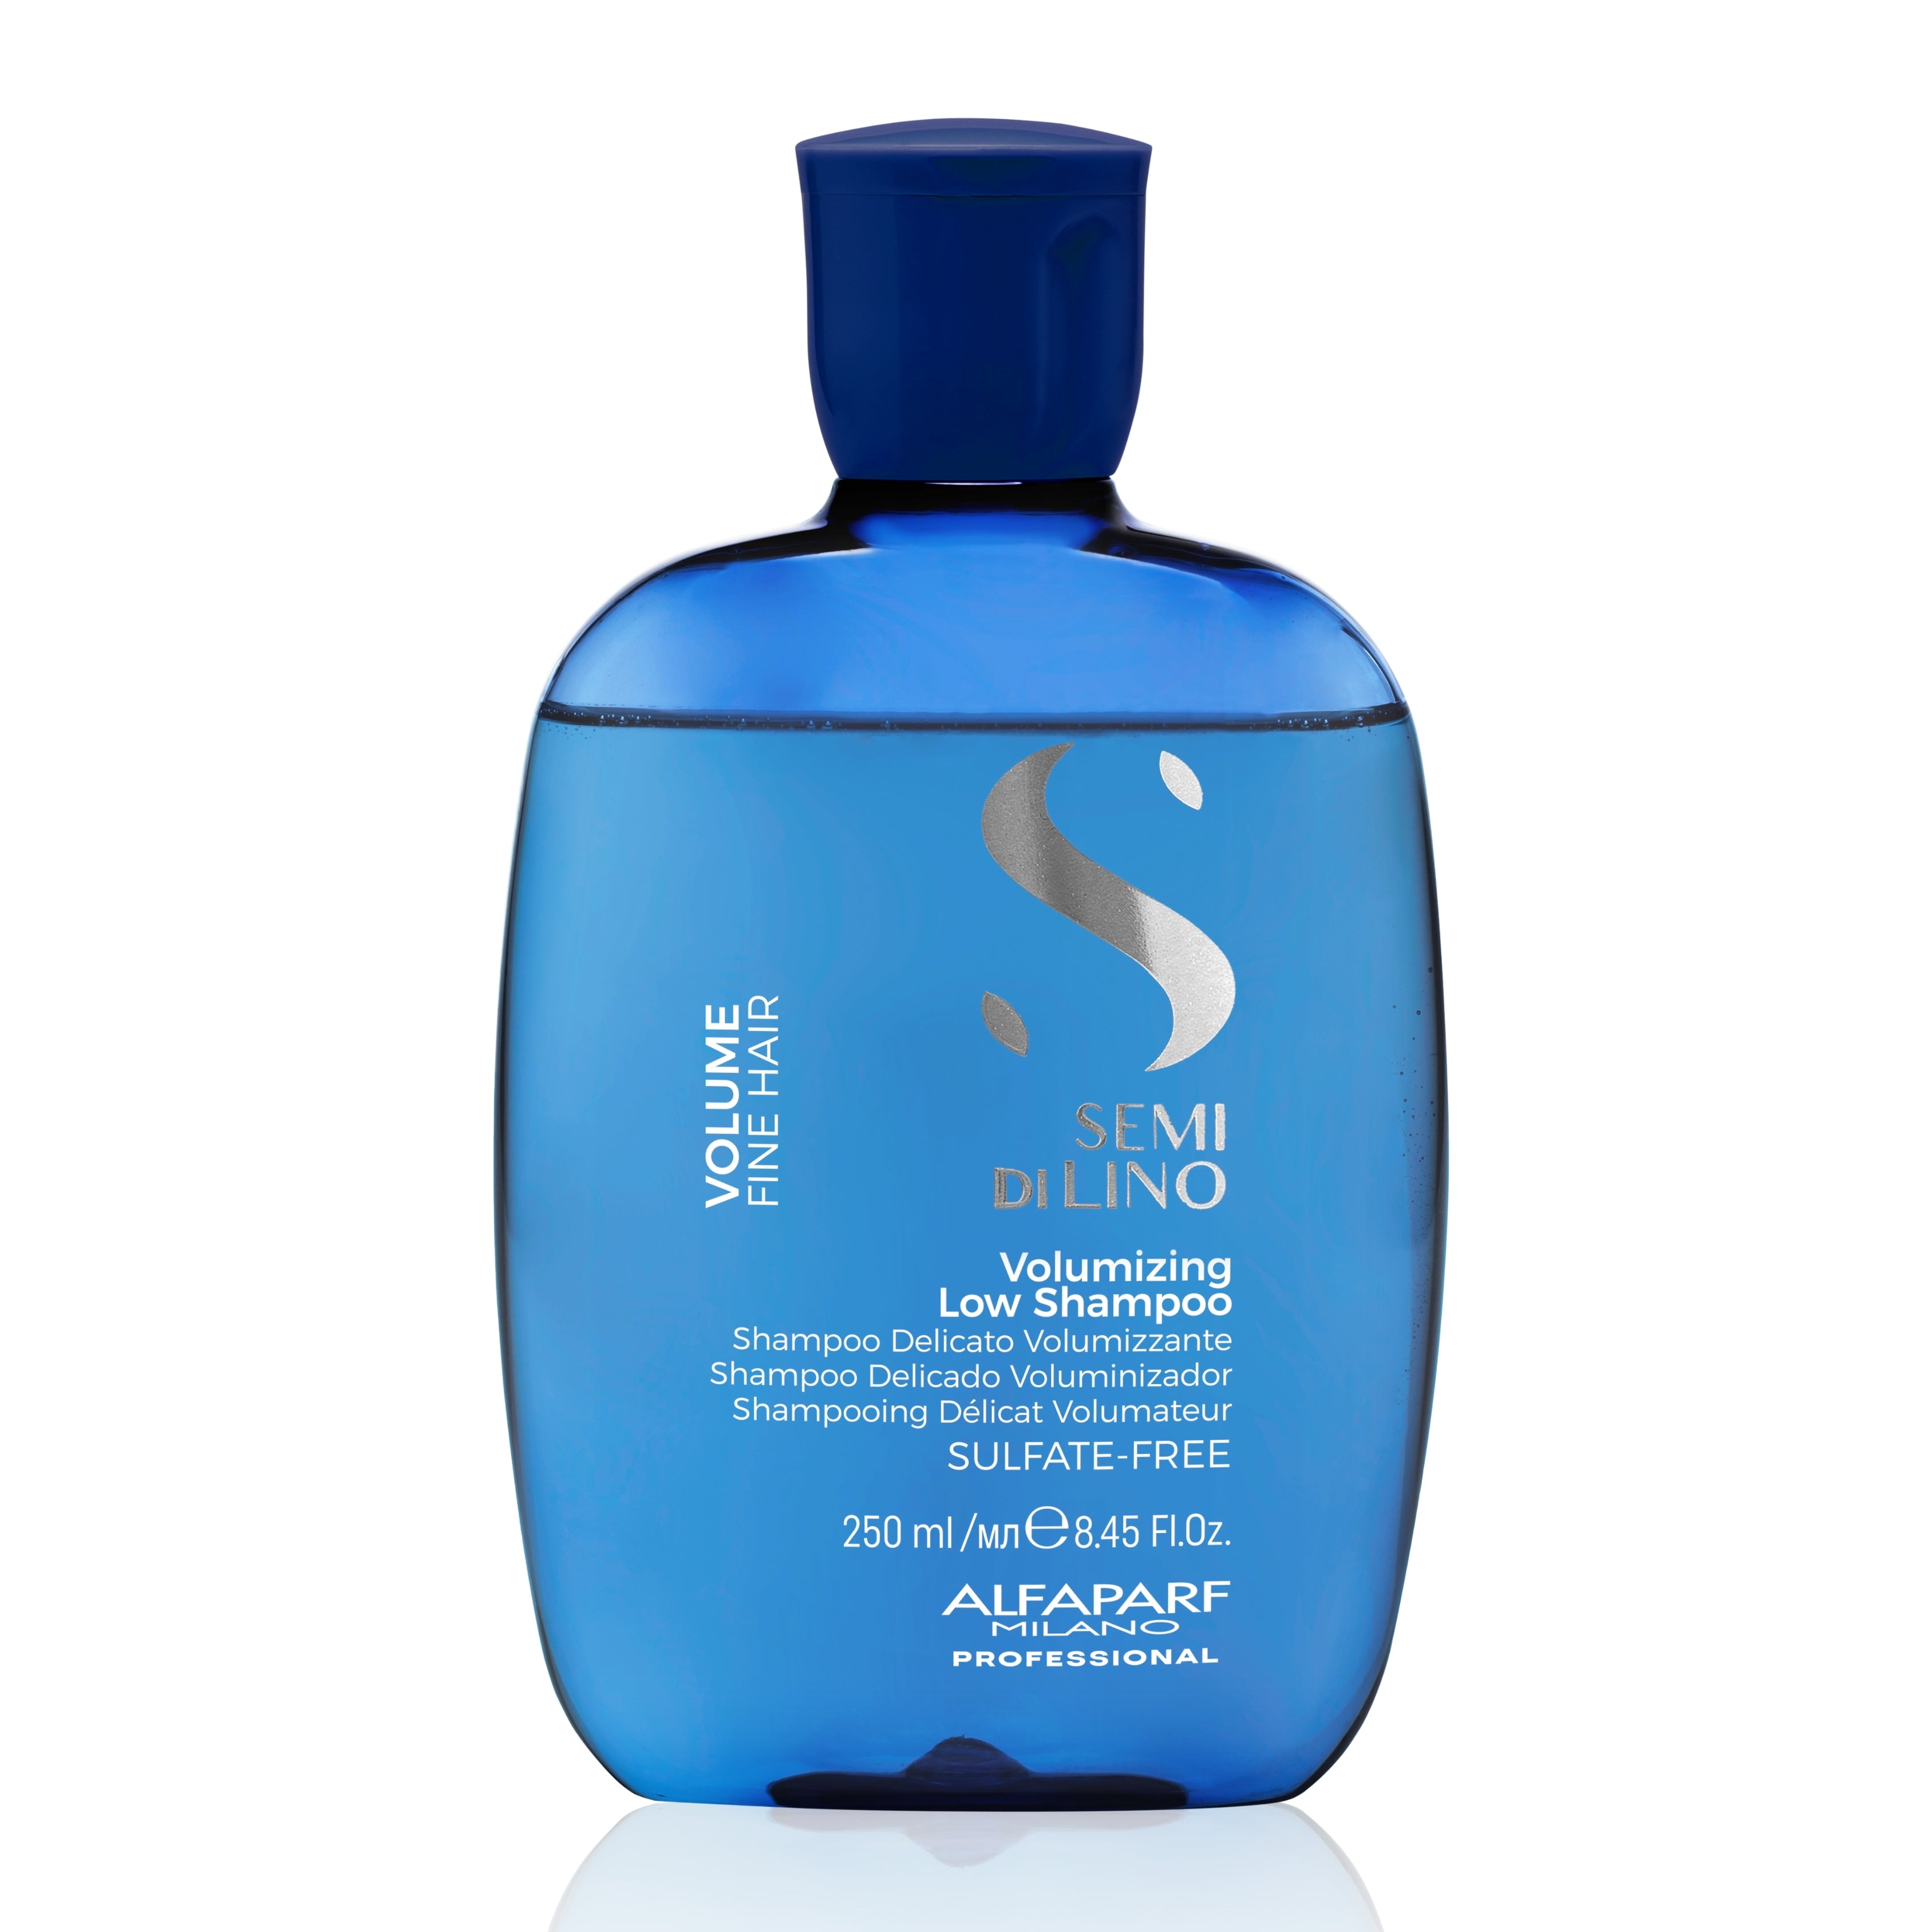 ALFAPARF MILANO SEMI DI LINO Volumizing Low Shampoo 250ML